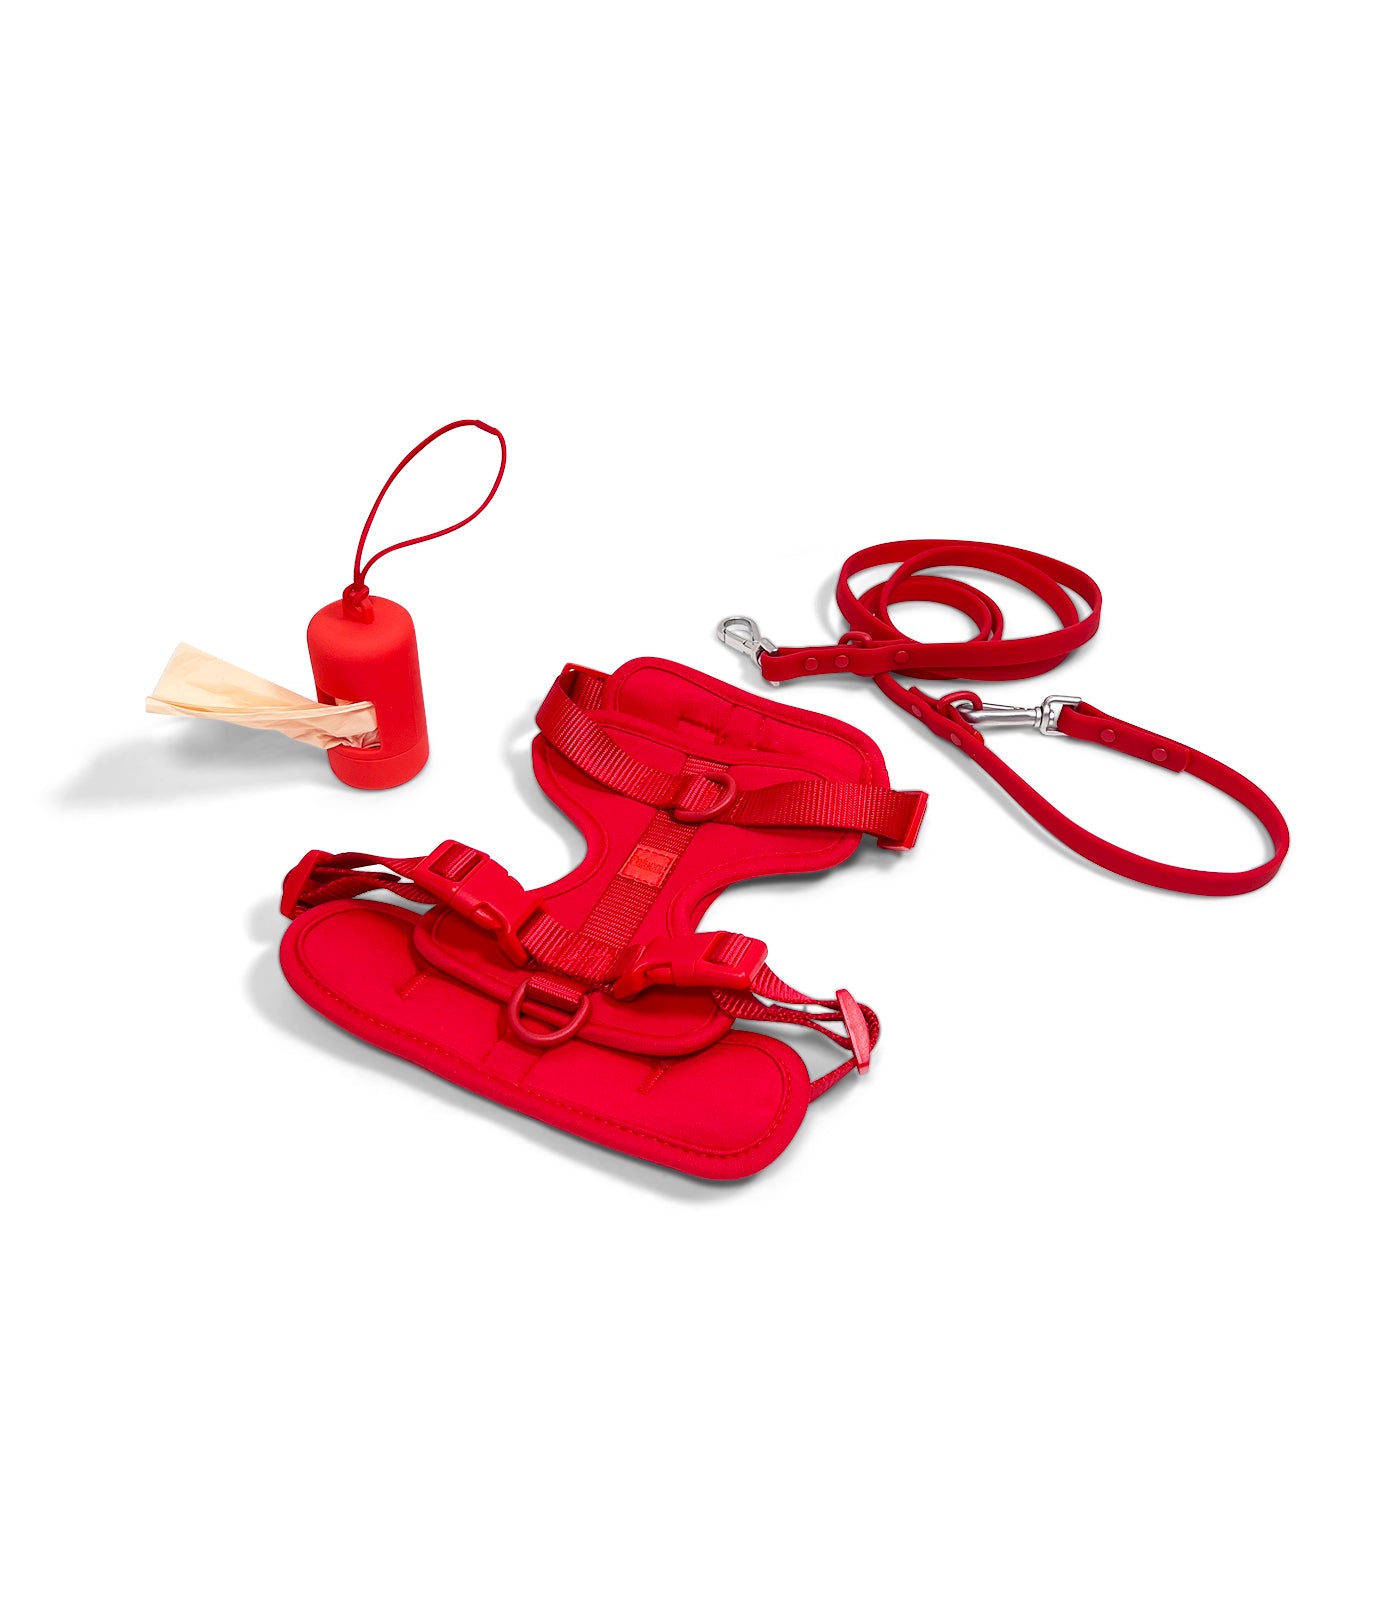 Strawberry harness kit